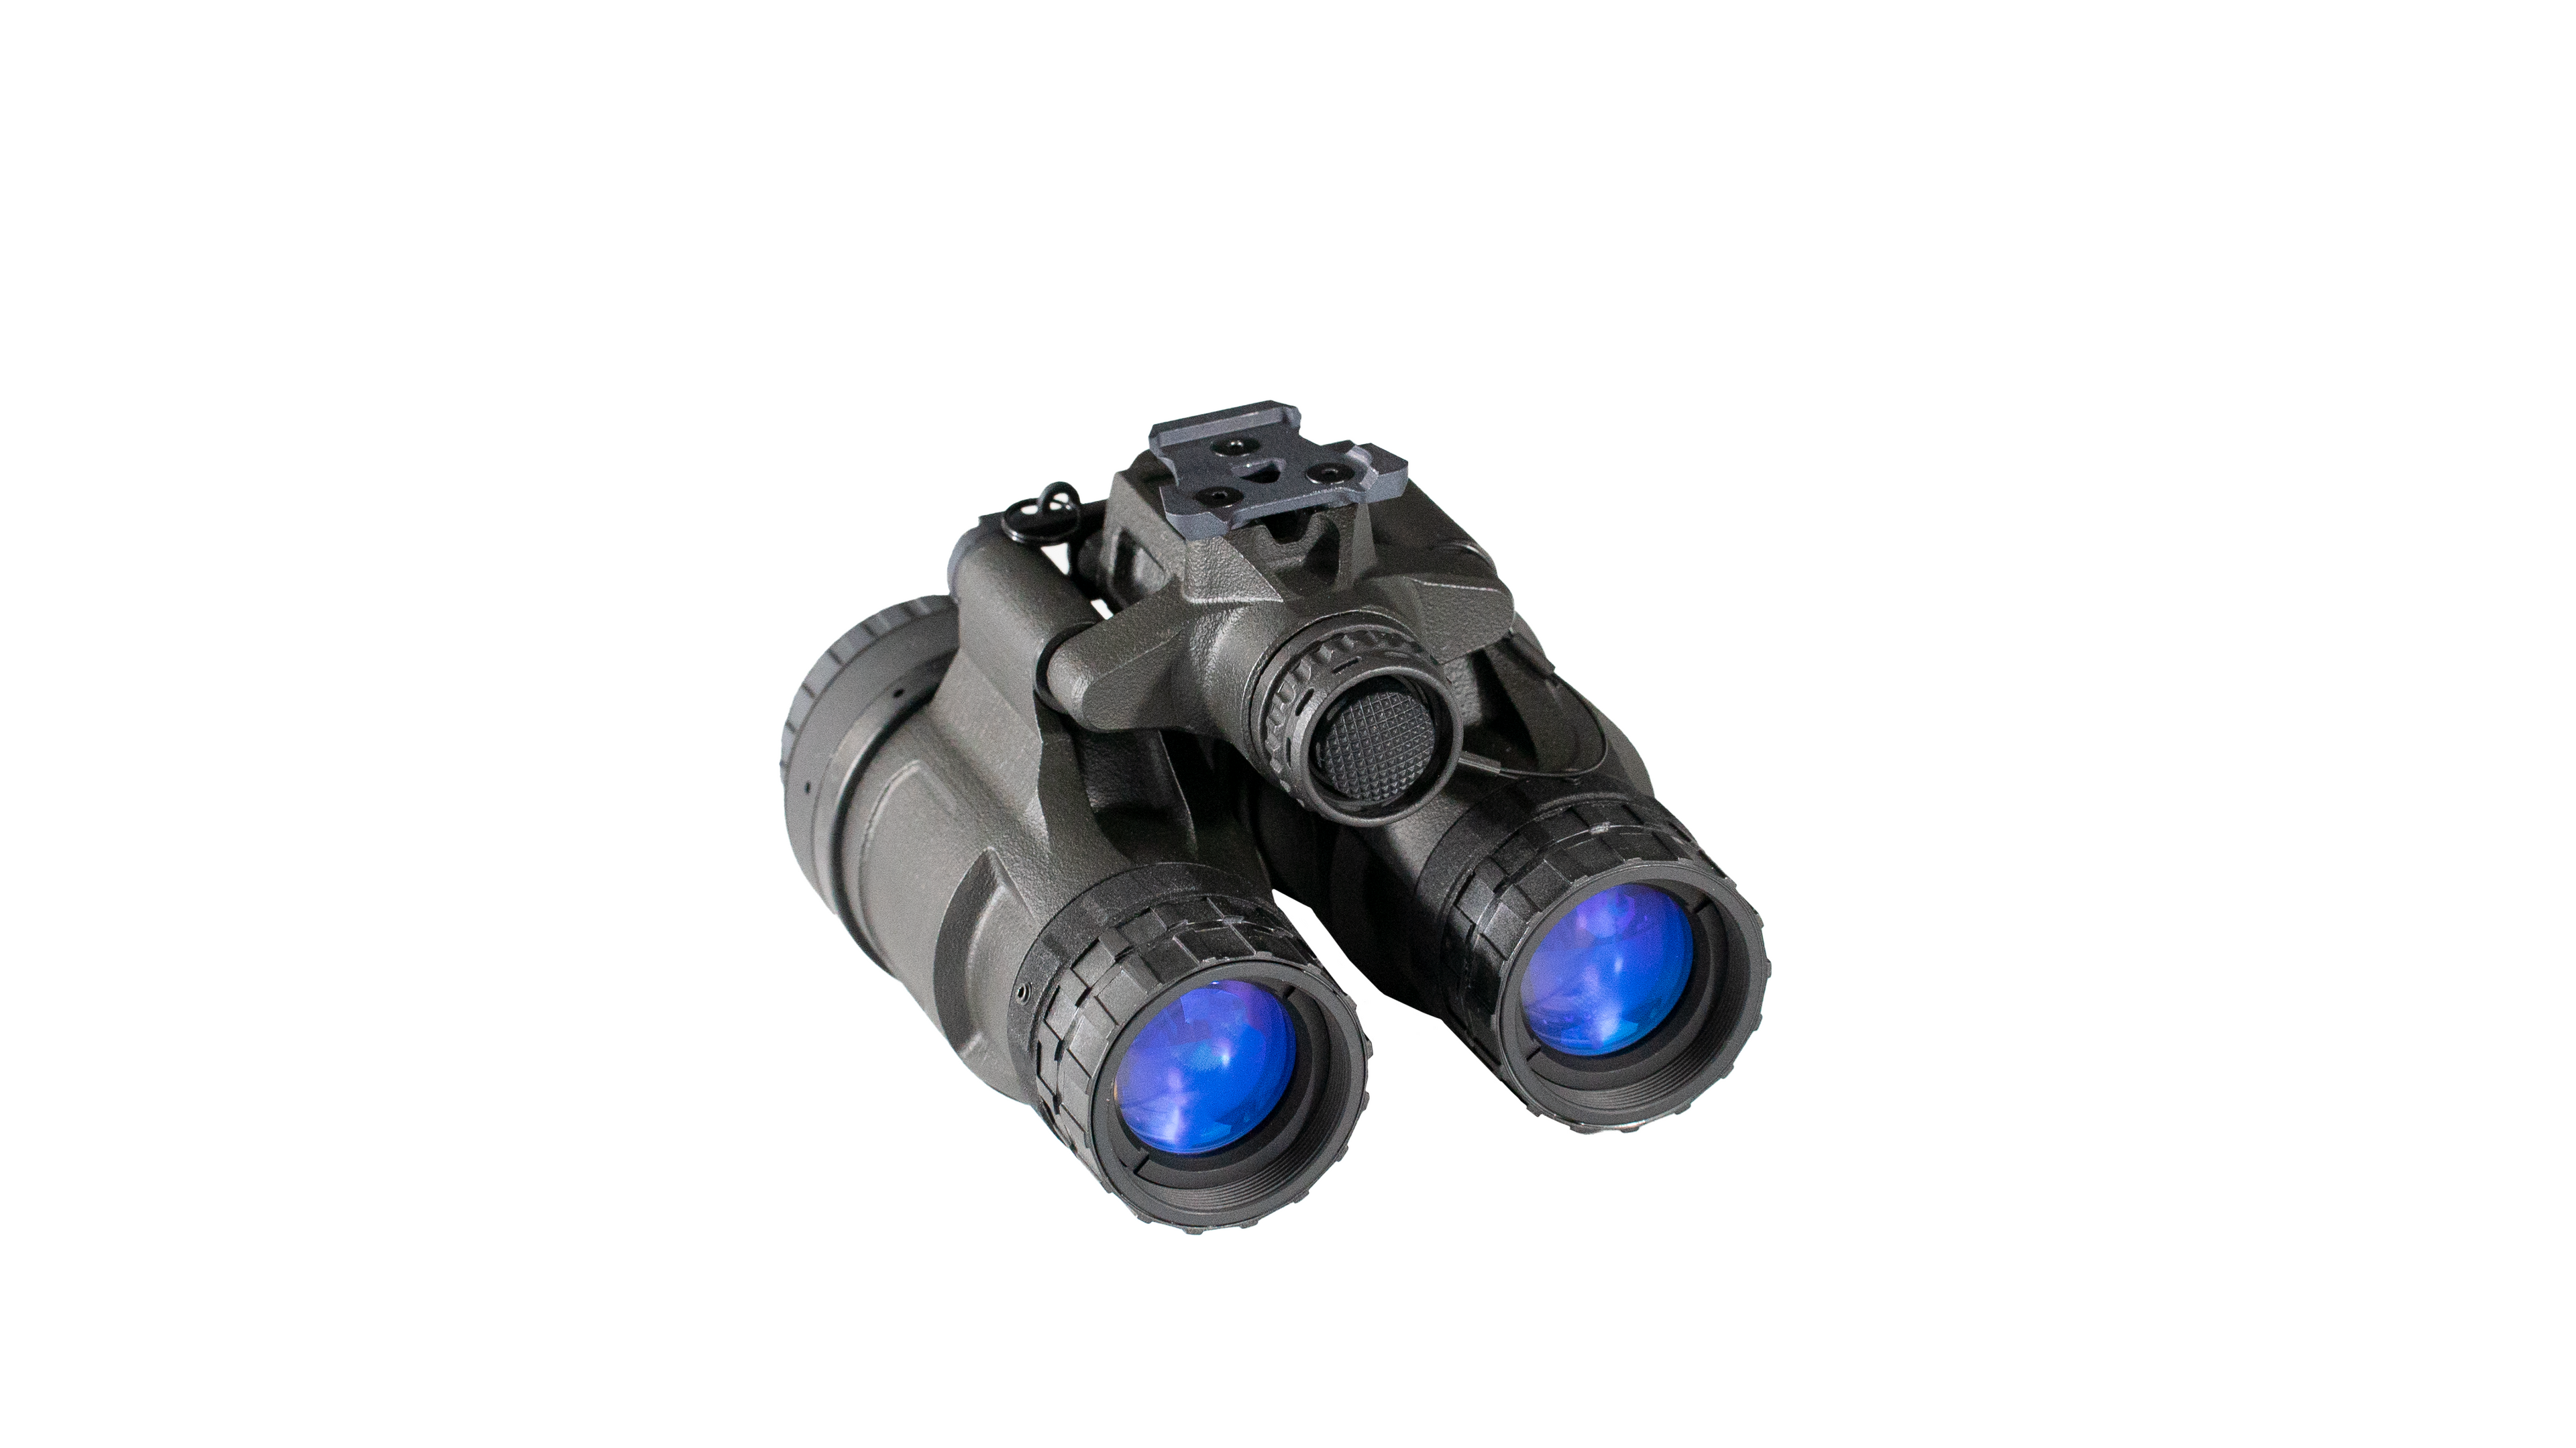 Nocturn Industries Katana night vision binocular complete device, left angle